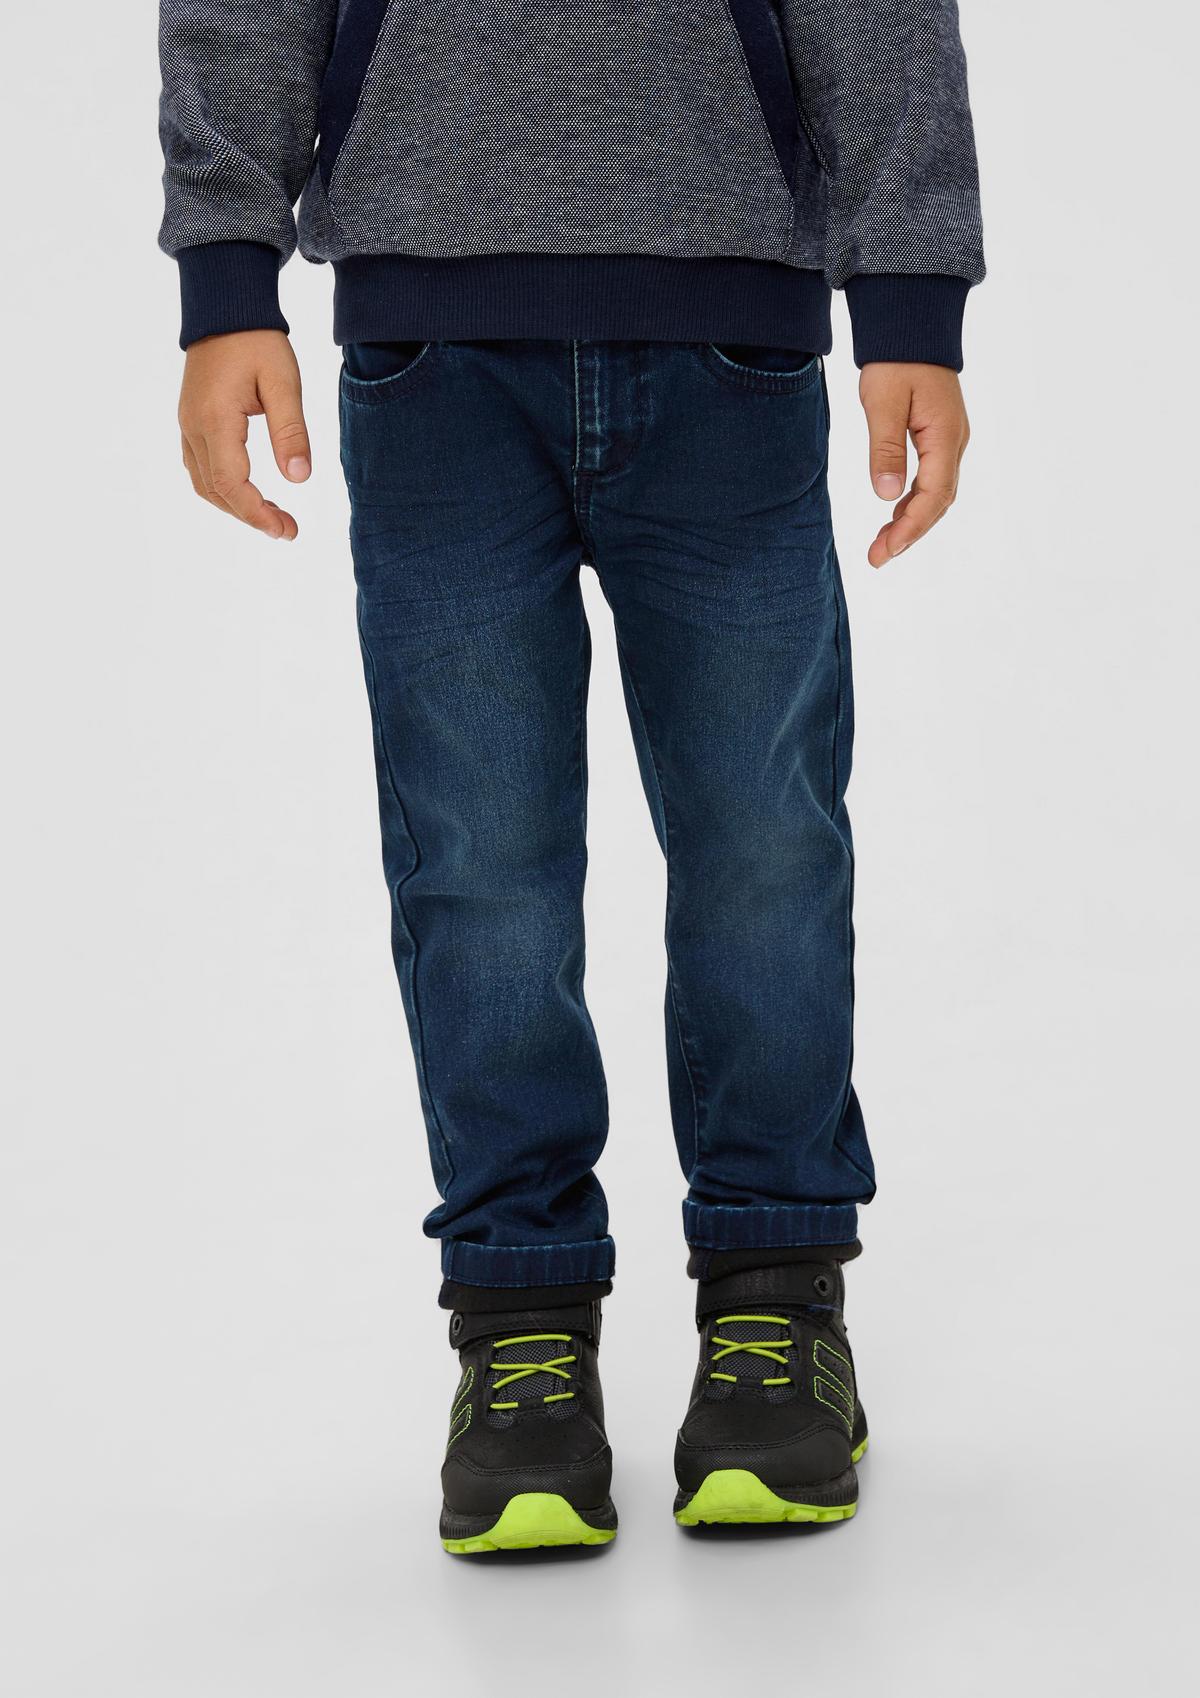 s.Oliver Jeans Pelle / Regular Fit / Mid Rise / Straight Leg / Used-Look